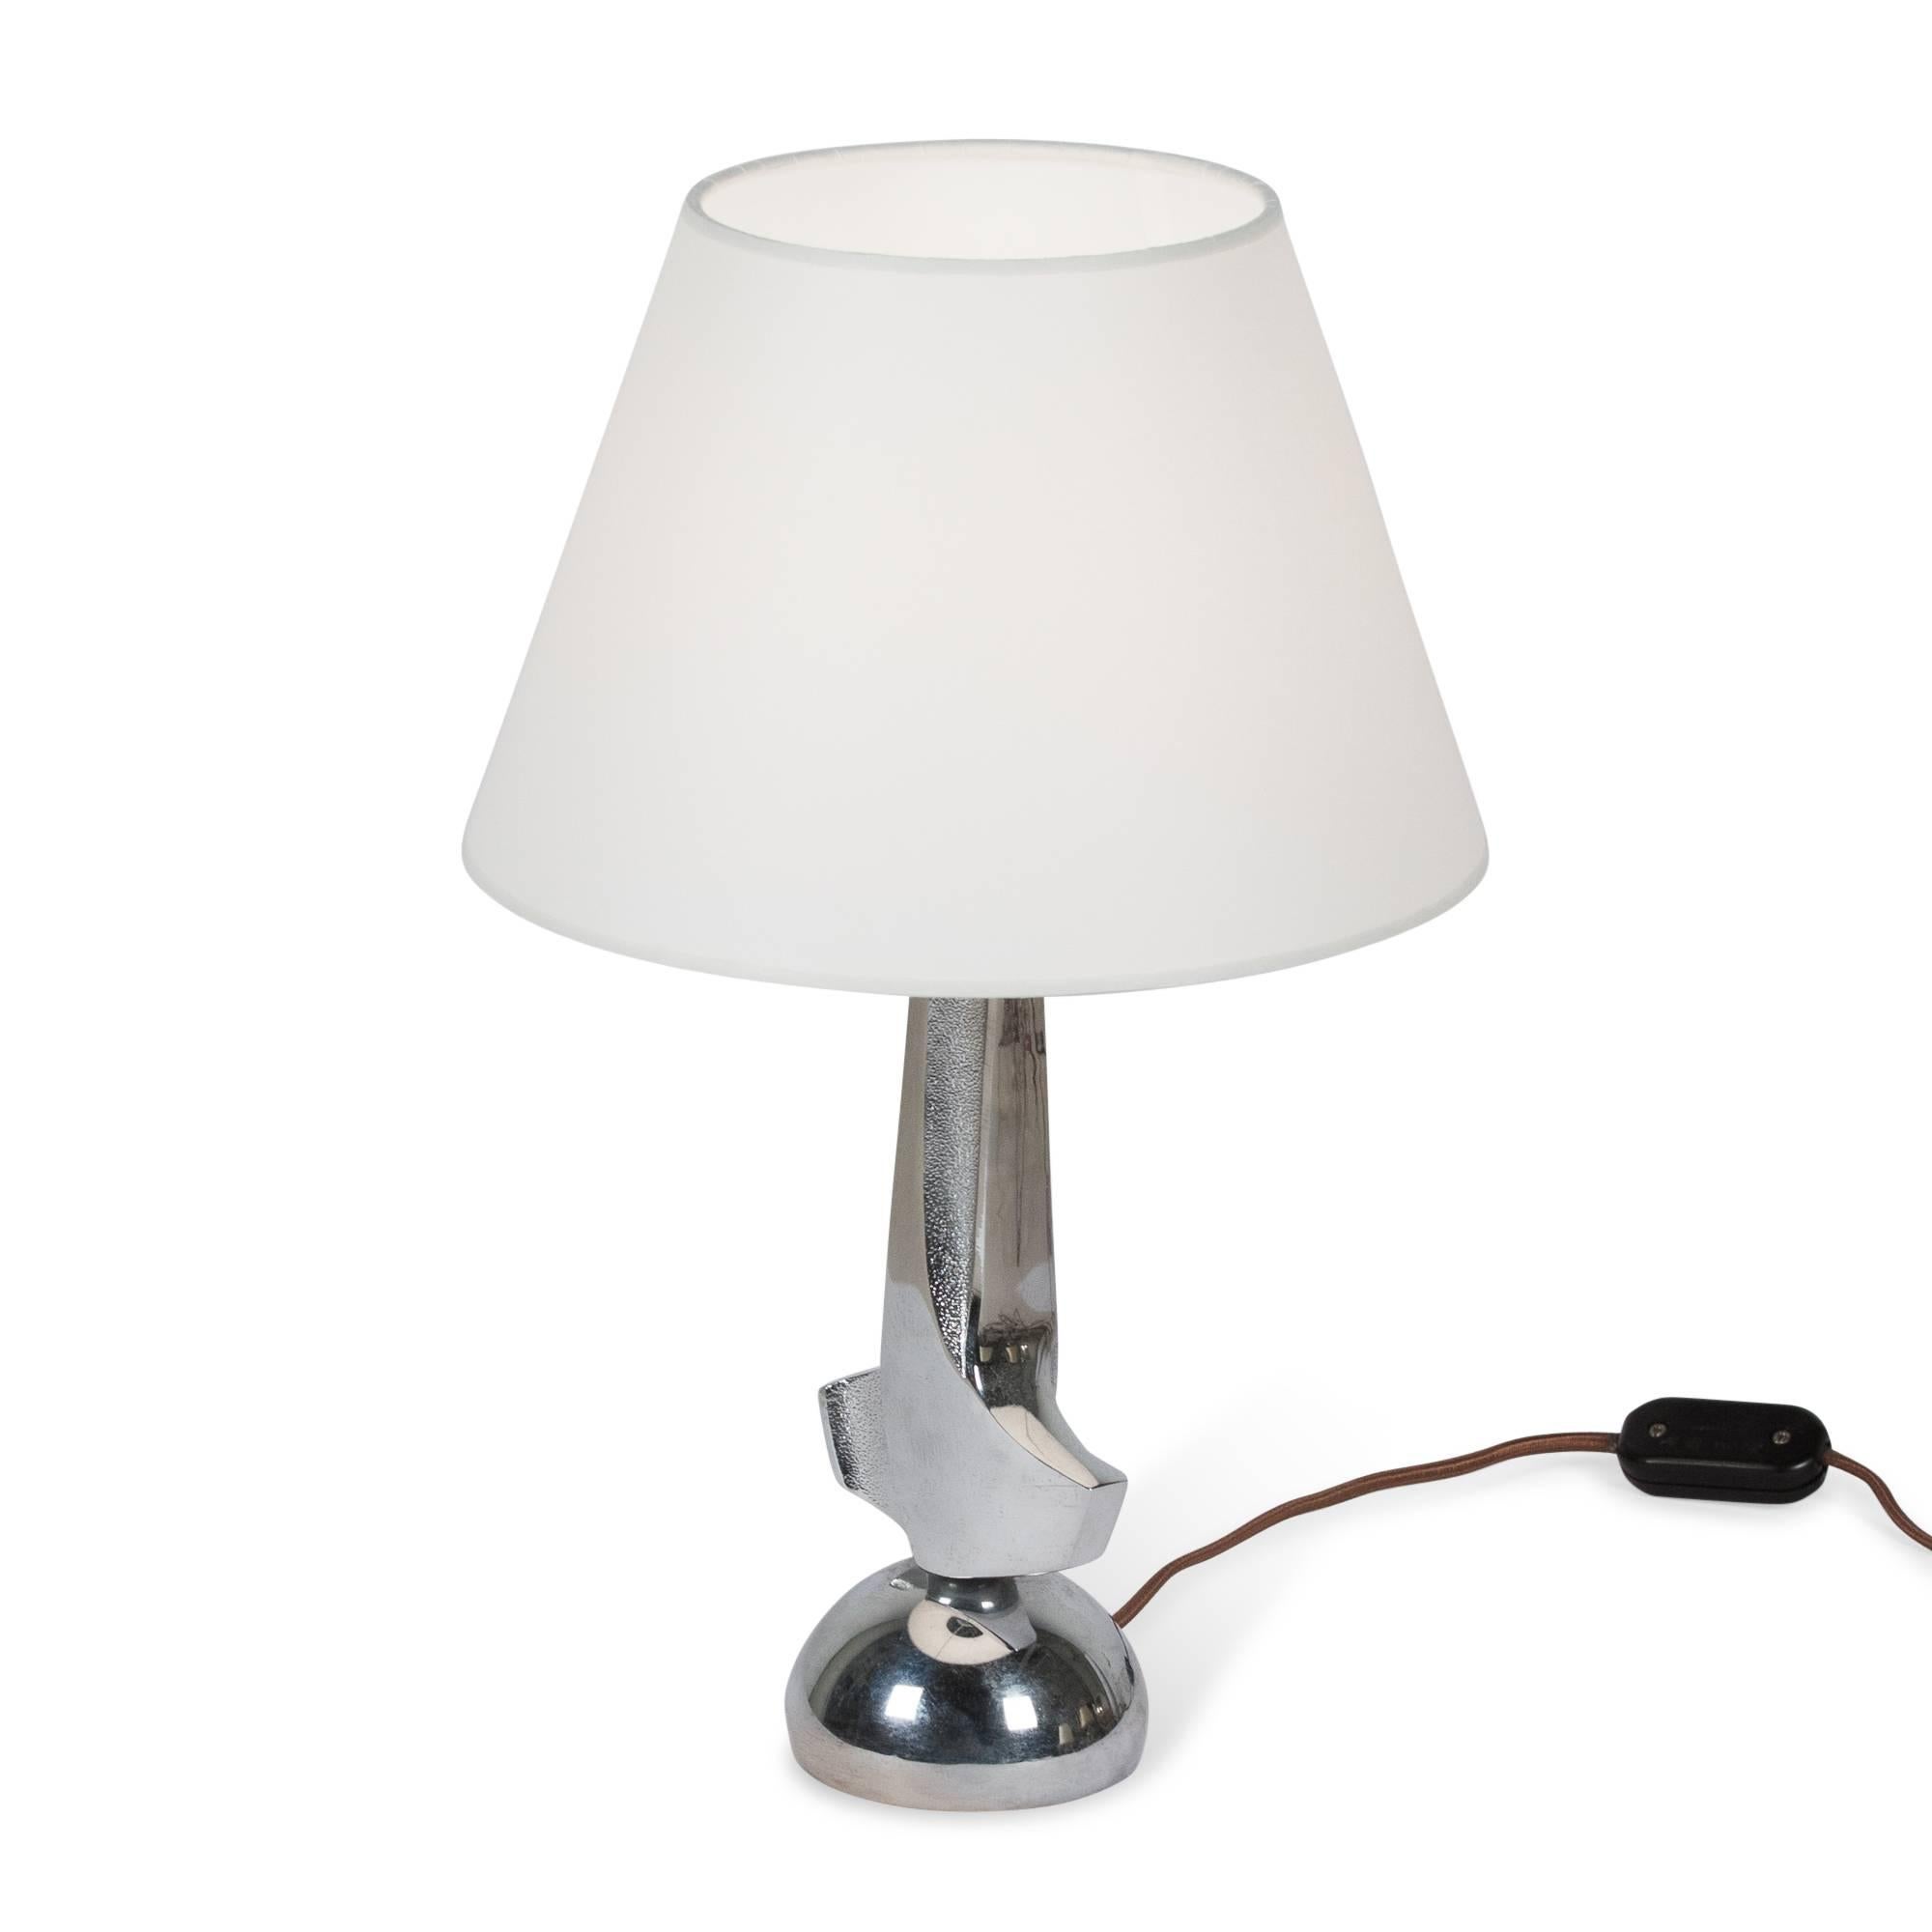 Mid-20th Century Chrome Streamline Table Lamp, Italian, 1930s For Sale